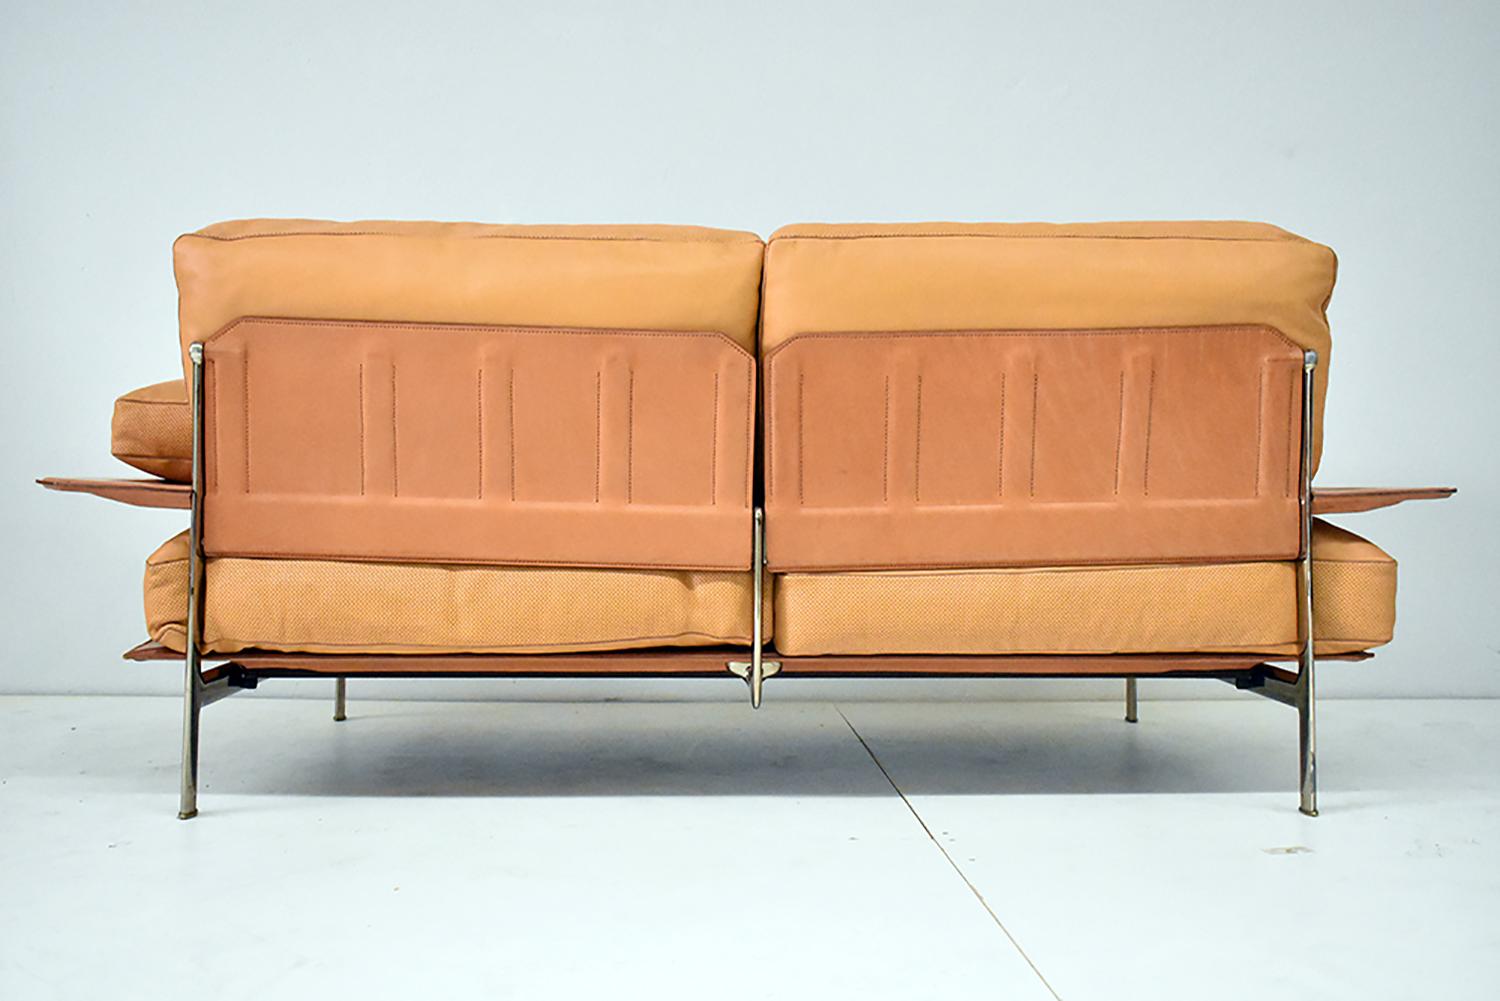 Late 20th Century Italian Diesis Ochre Leather Sofa by Citterio & Nava for B&B Italia, 1979